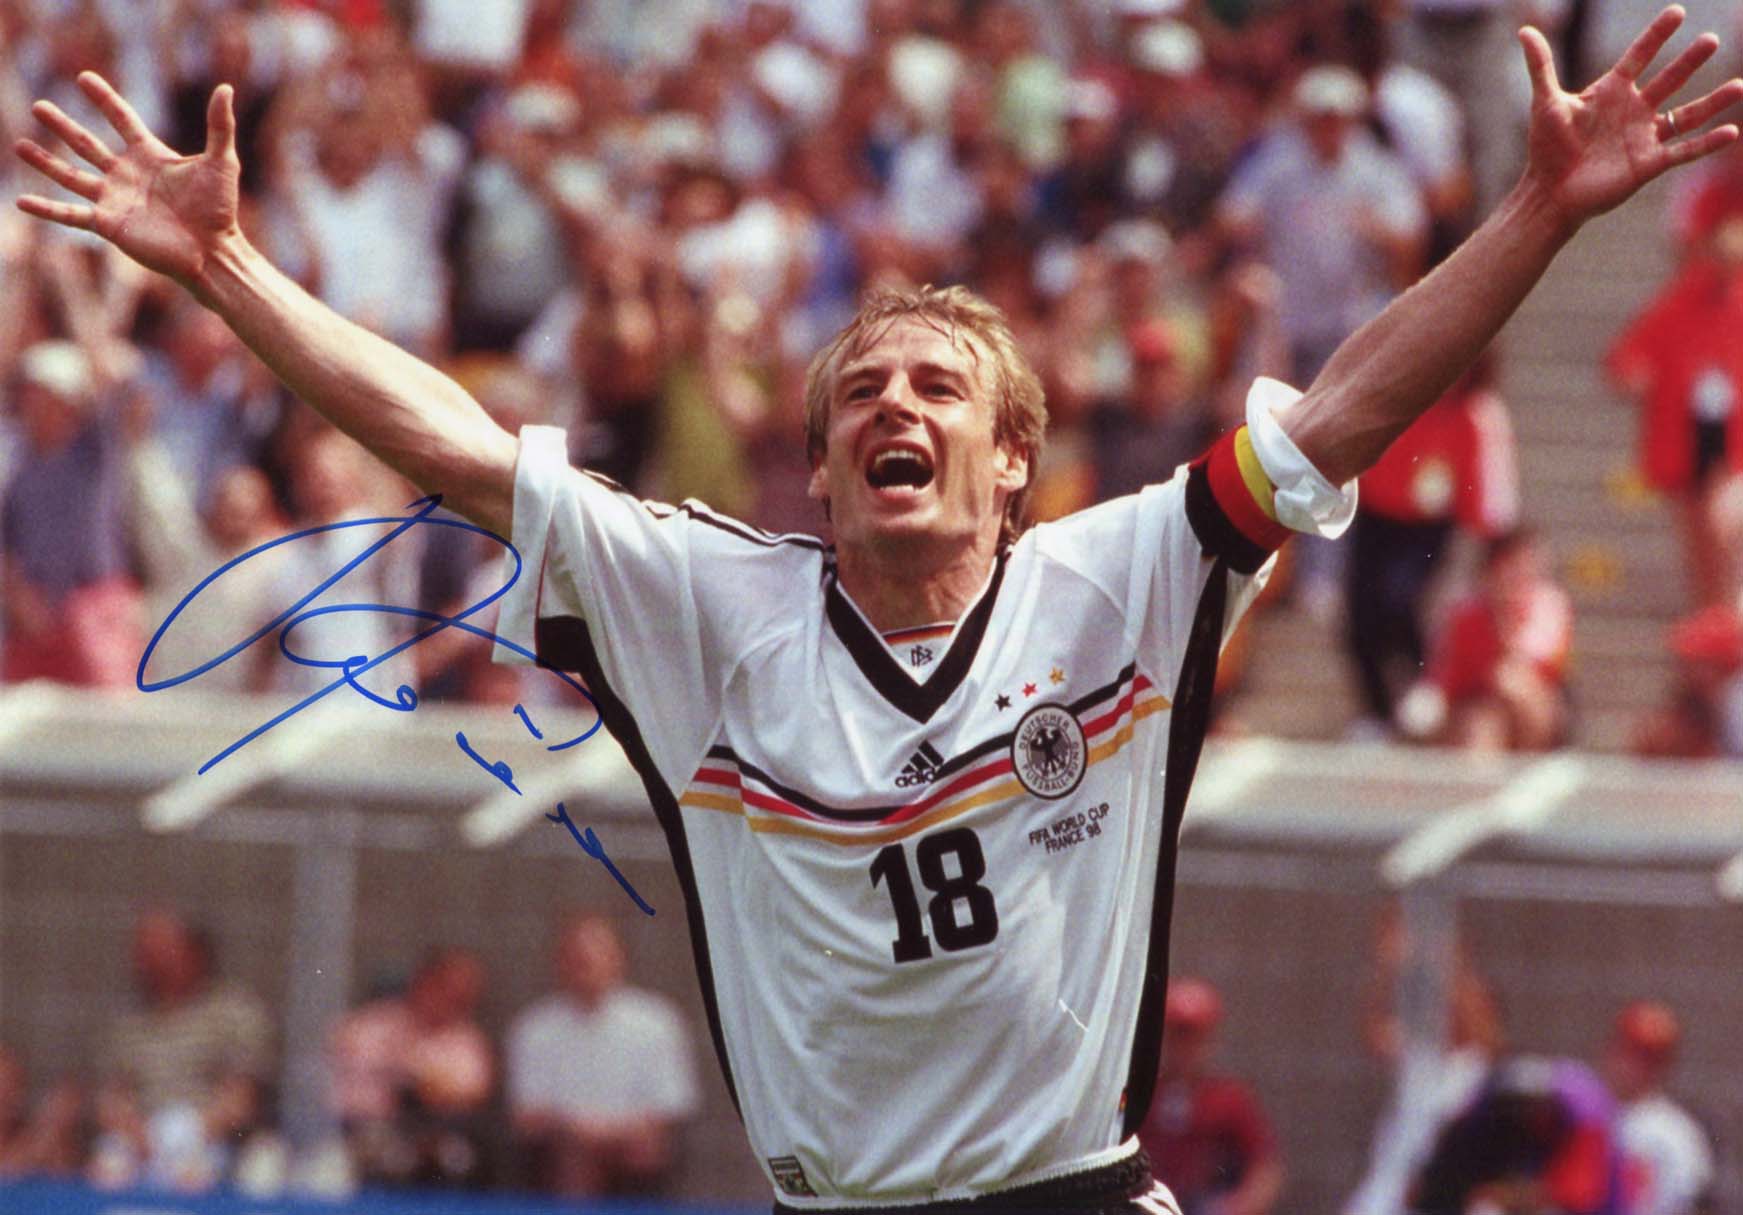 Jürgen  Klinsmann Autograph Autogramm | ID 7970593112213